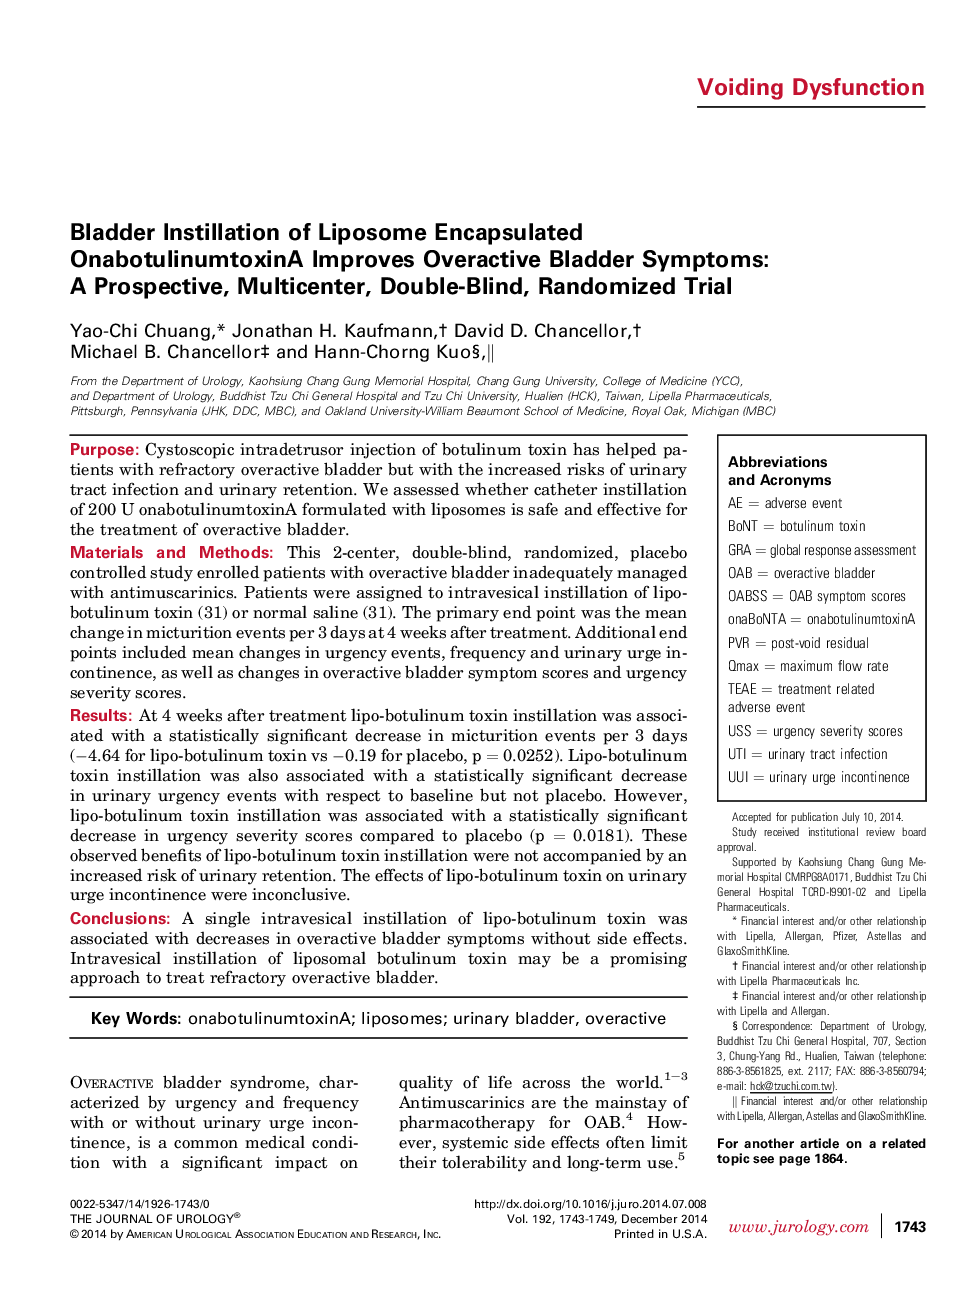 Bladder Instillation of Liposome Encapsulated OnabotulinumtoxinA Improves Overactive Bladder Symptoms: A Prospective, Multicenter, Double-Blind, Randomized Trial